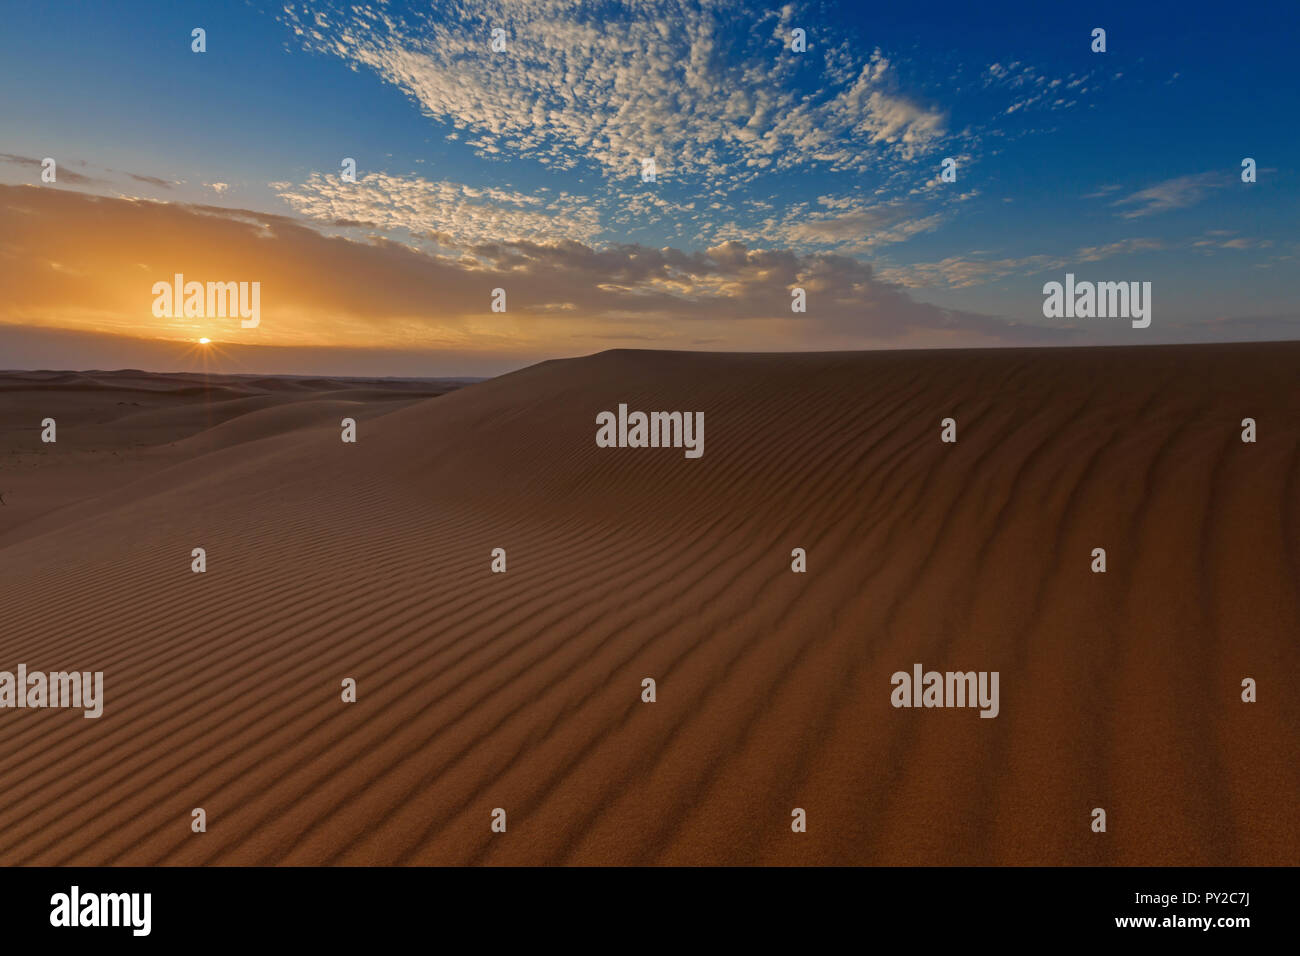 Desert landscape at sunset, Saudi Arabia Stock Photo